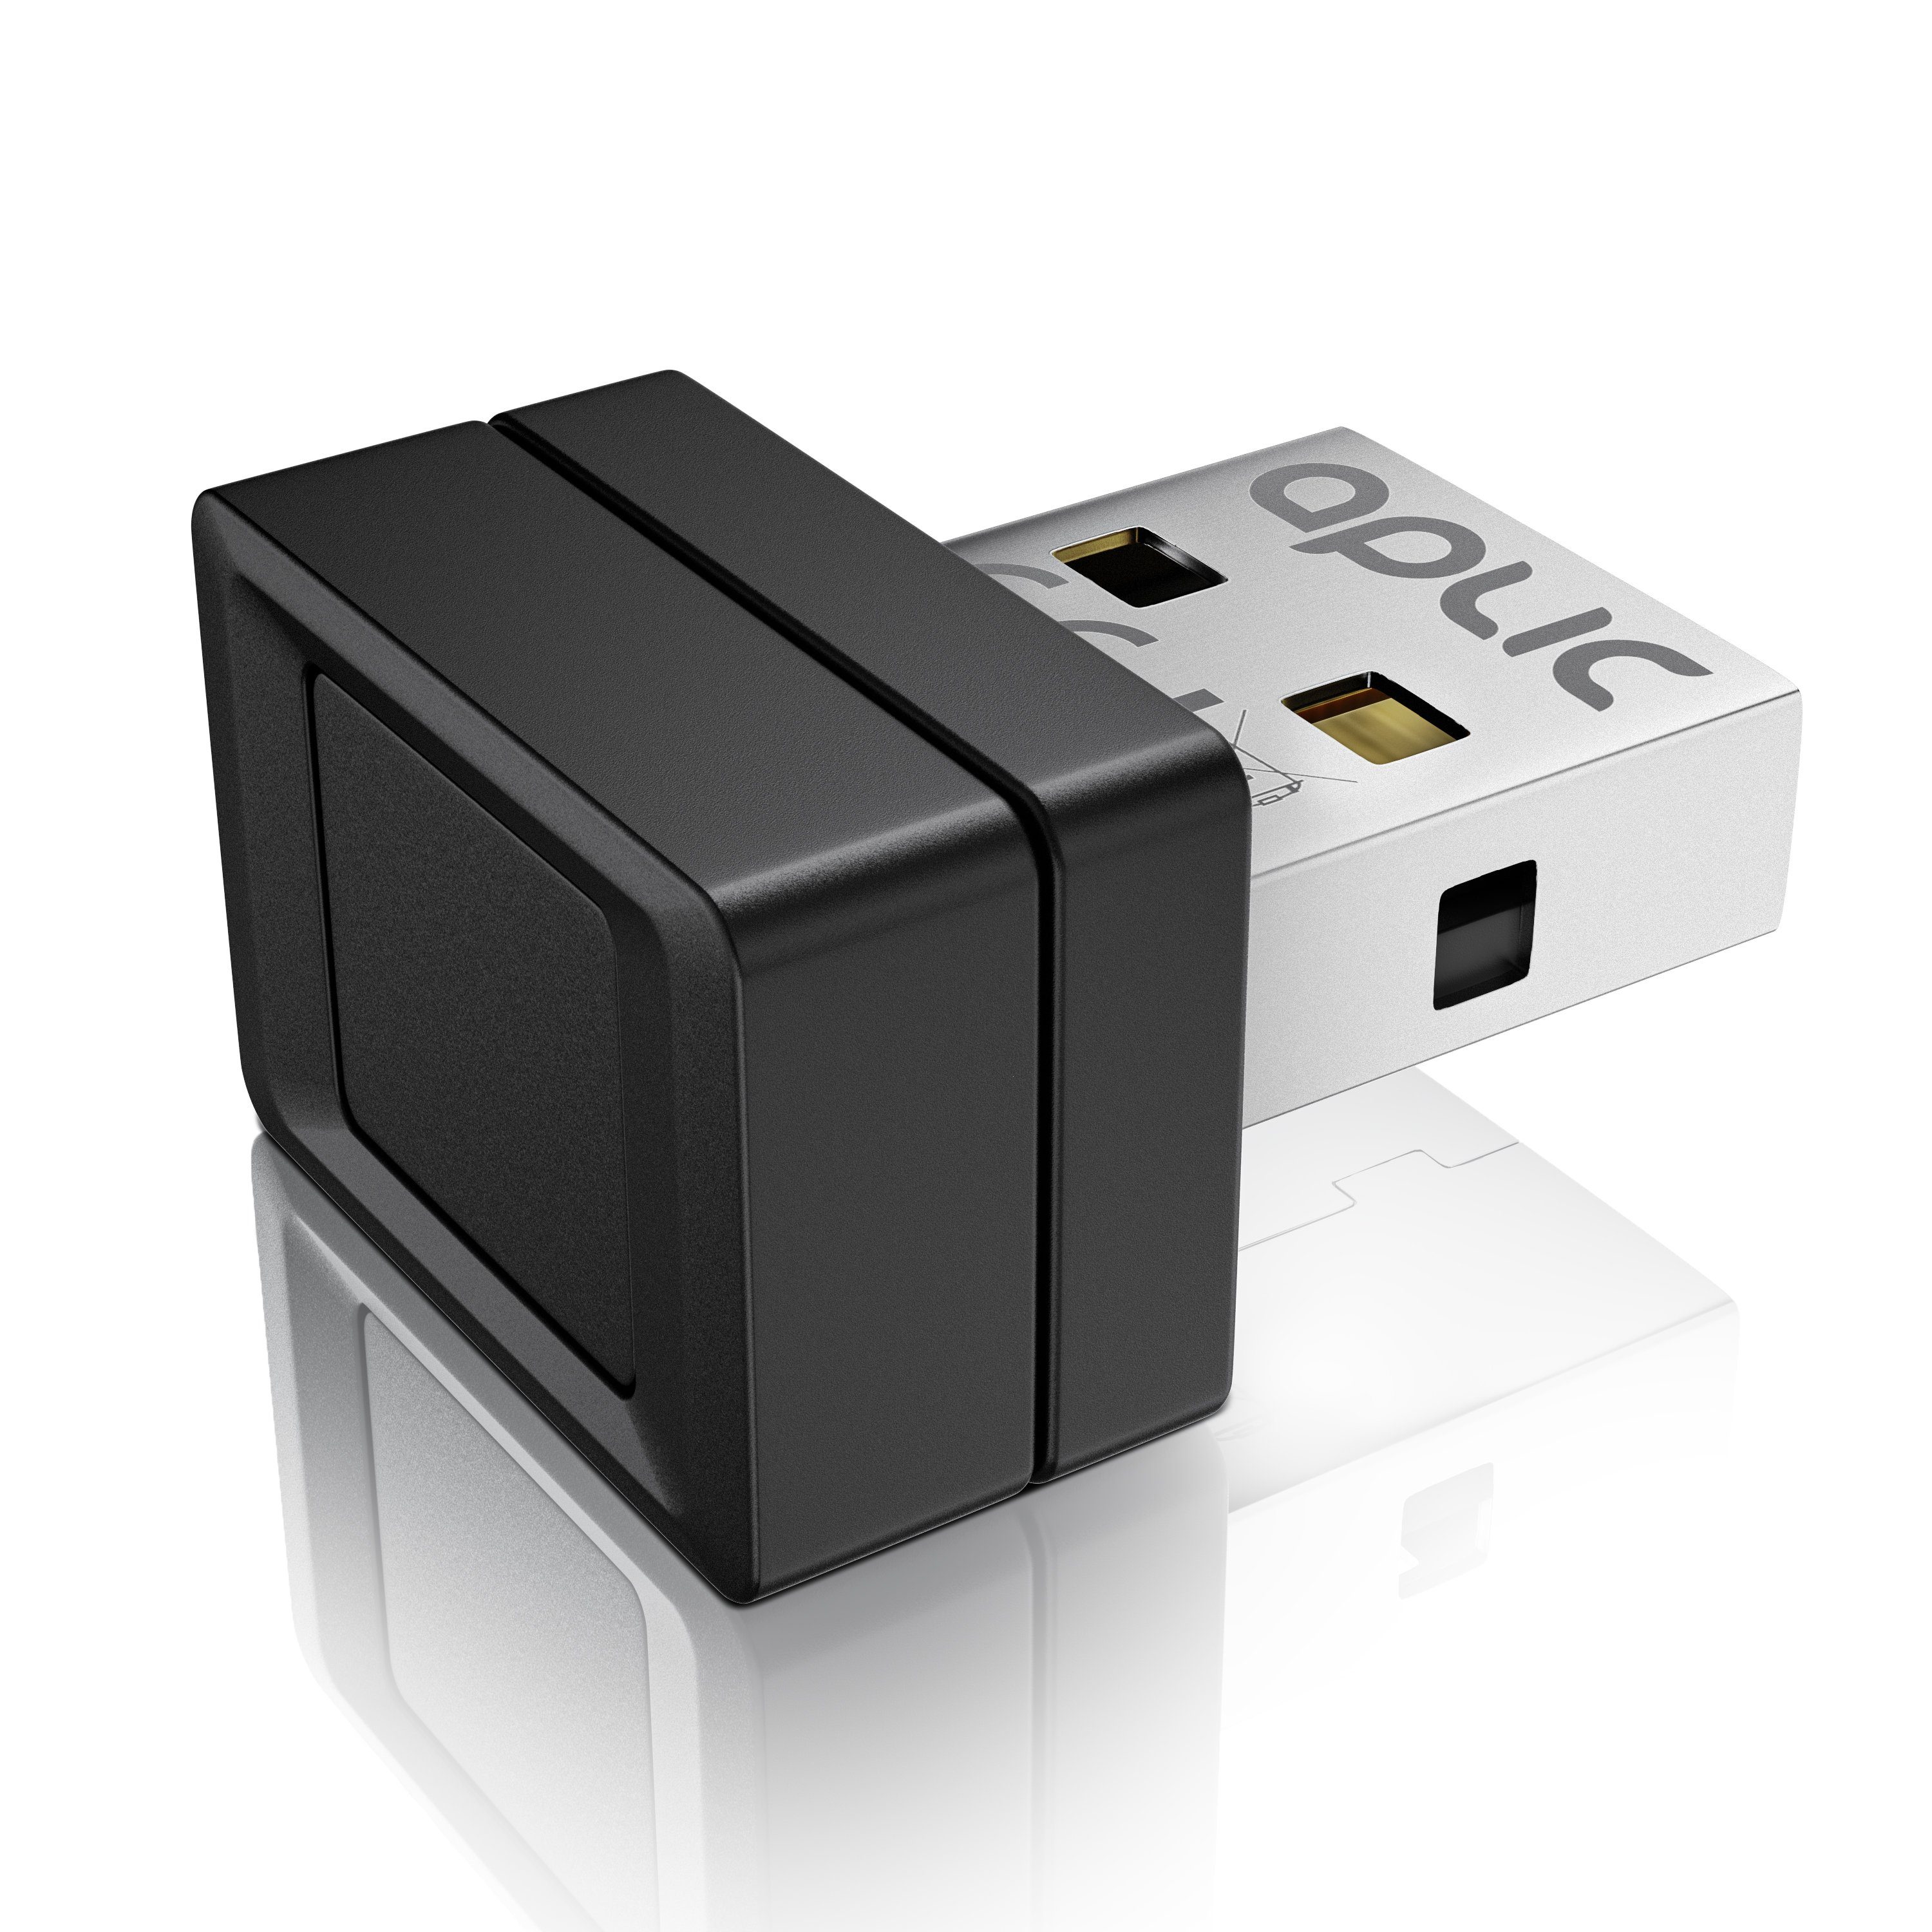 Aplic Fingerabdrucksensor, 10 USB zu Windows bis Fingerabdruckleser, 11, 8 10 Finger IDs, Scanner